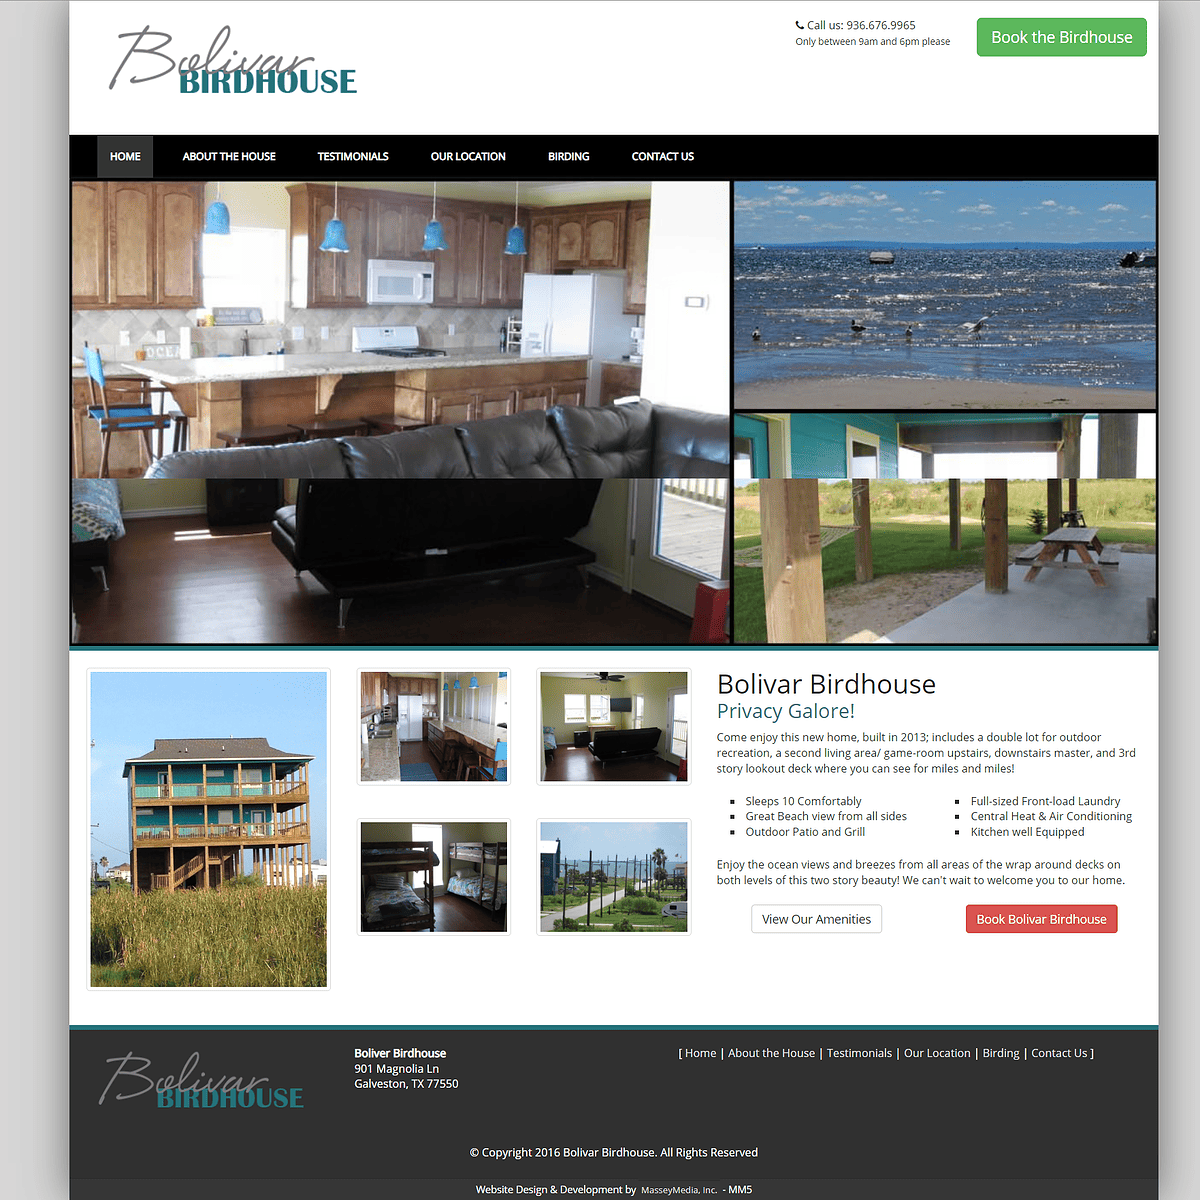 Bolivar Birdhouse website design screenshot - East Texas Website Design